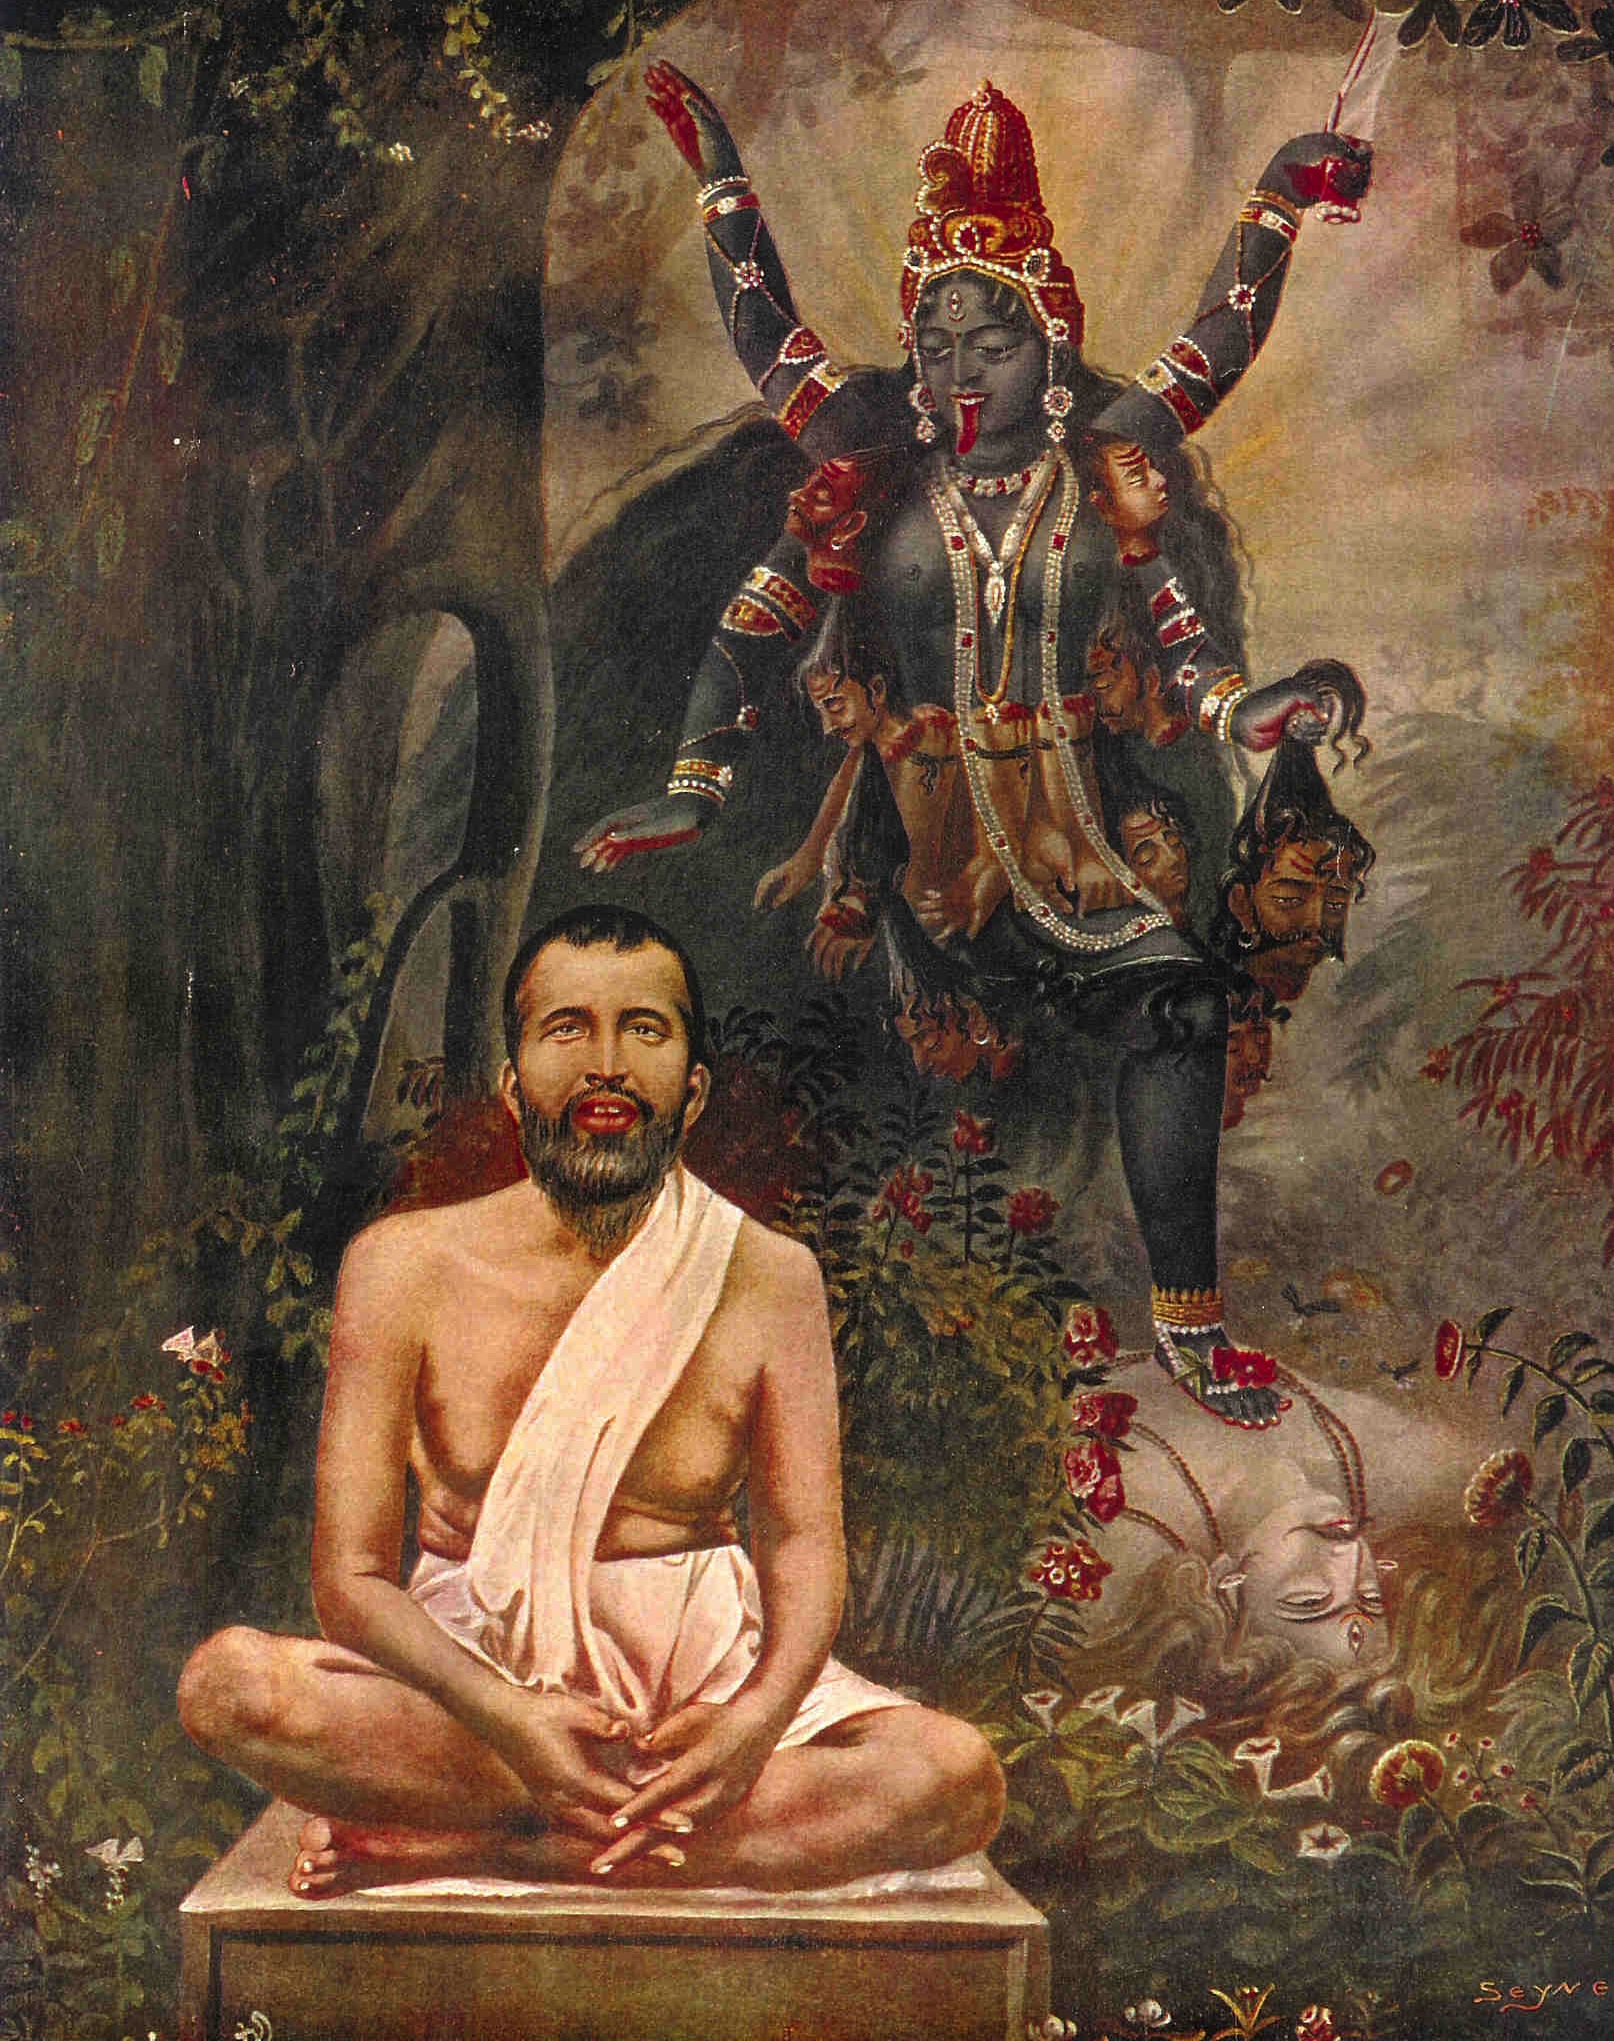 03-Kali-and-Ramakrishna.jpg